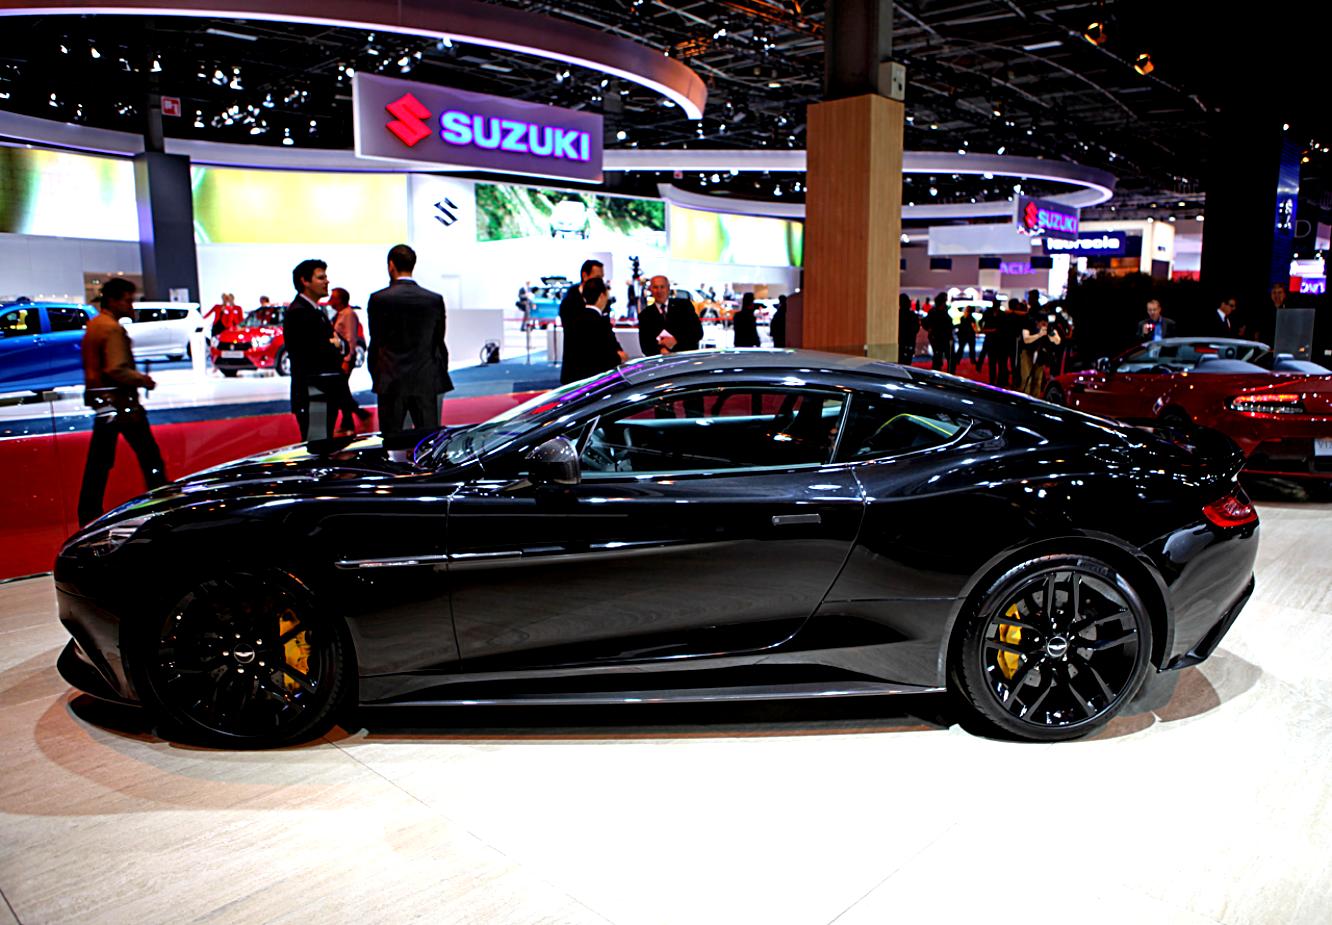 Aston Martin DB9 Carbon Edition 2014 #66